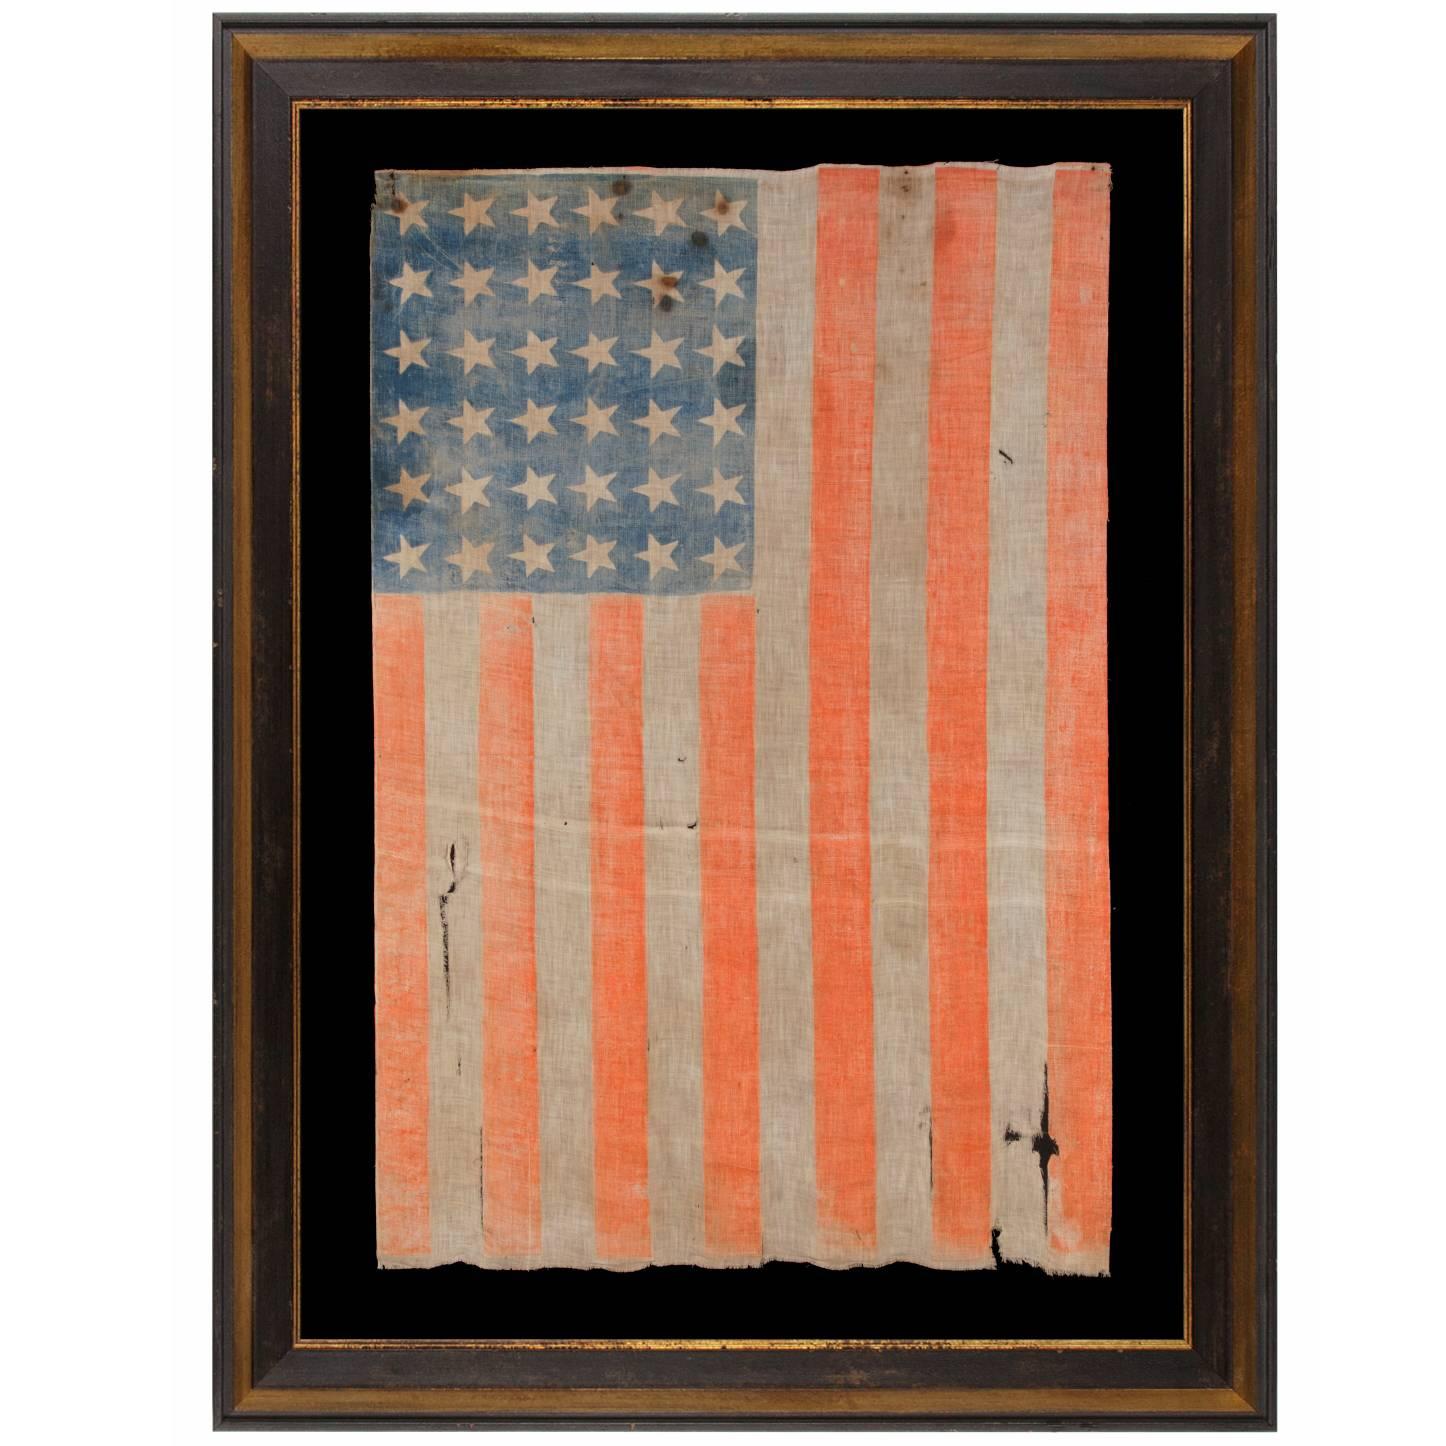 36 Star Antique American Parade Flag of the Civil War Era